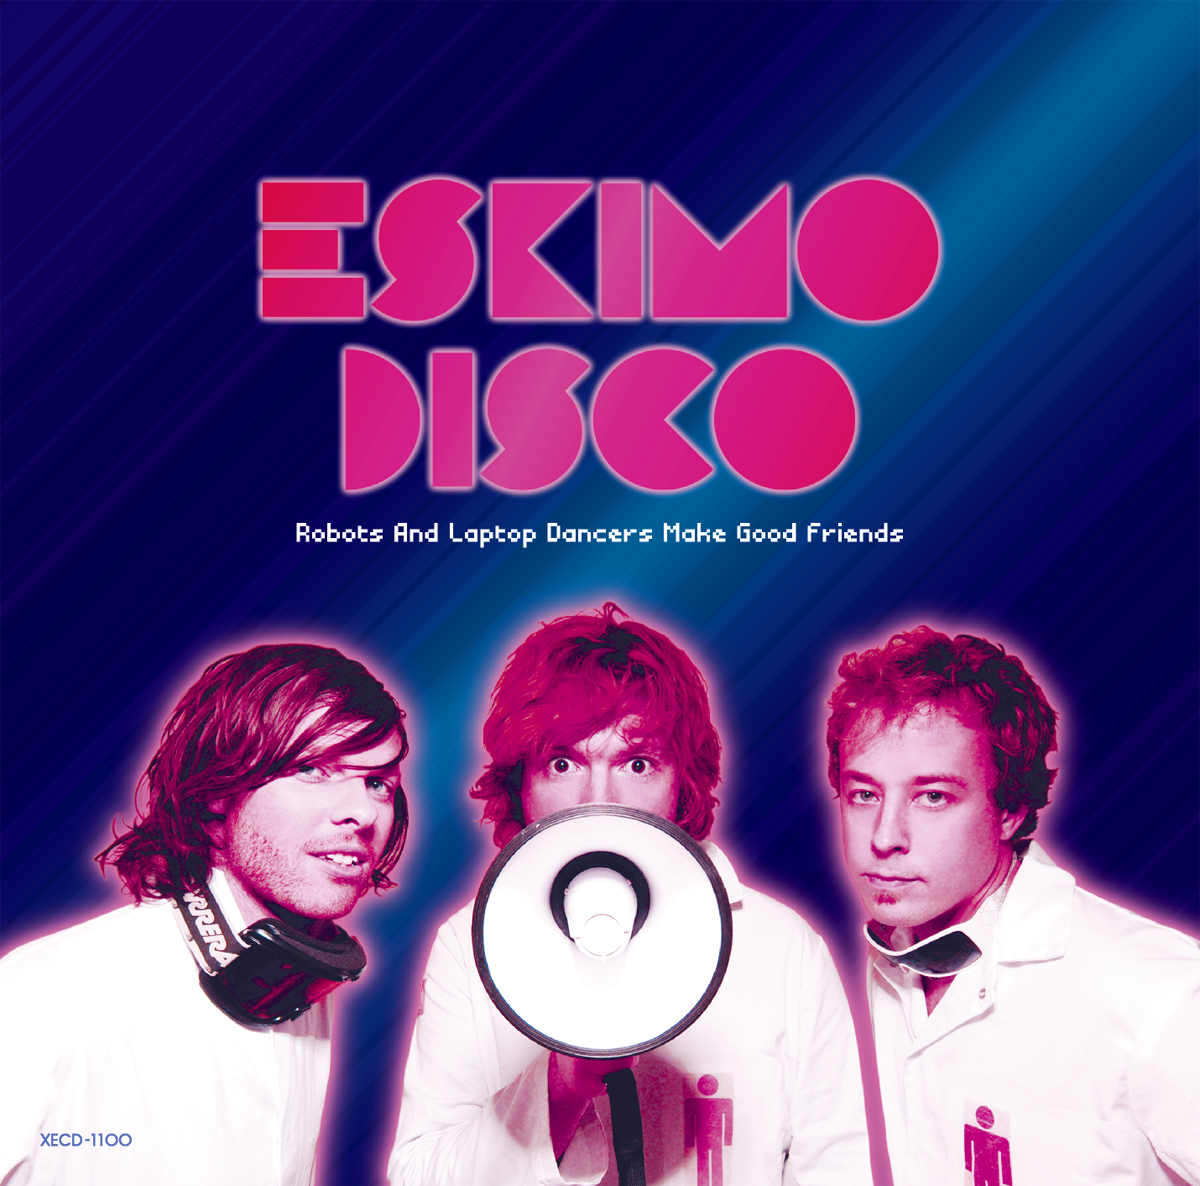 Eskimo Disco “Robots And Laptop Dancers Make Good Friends”